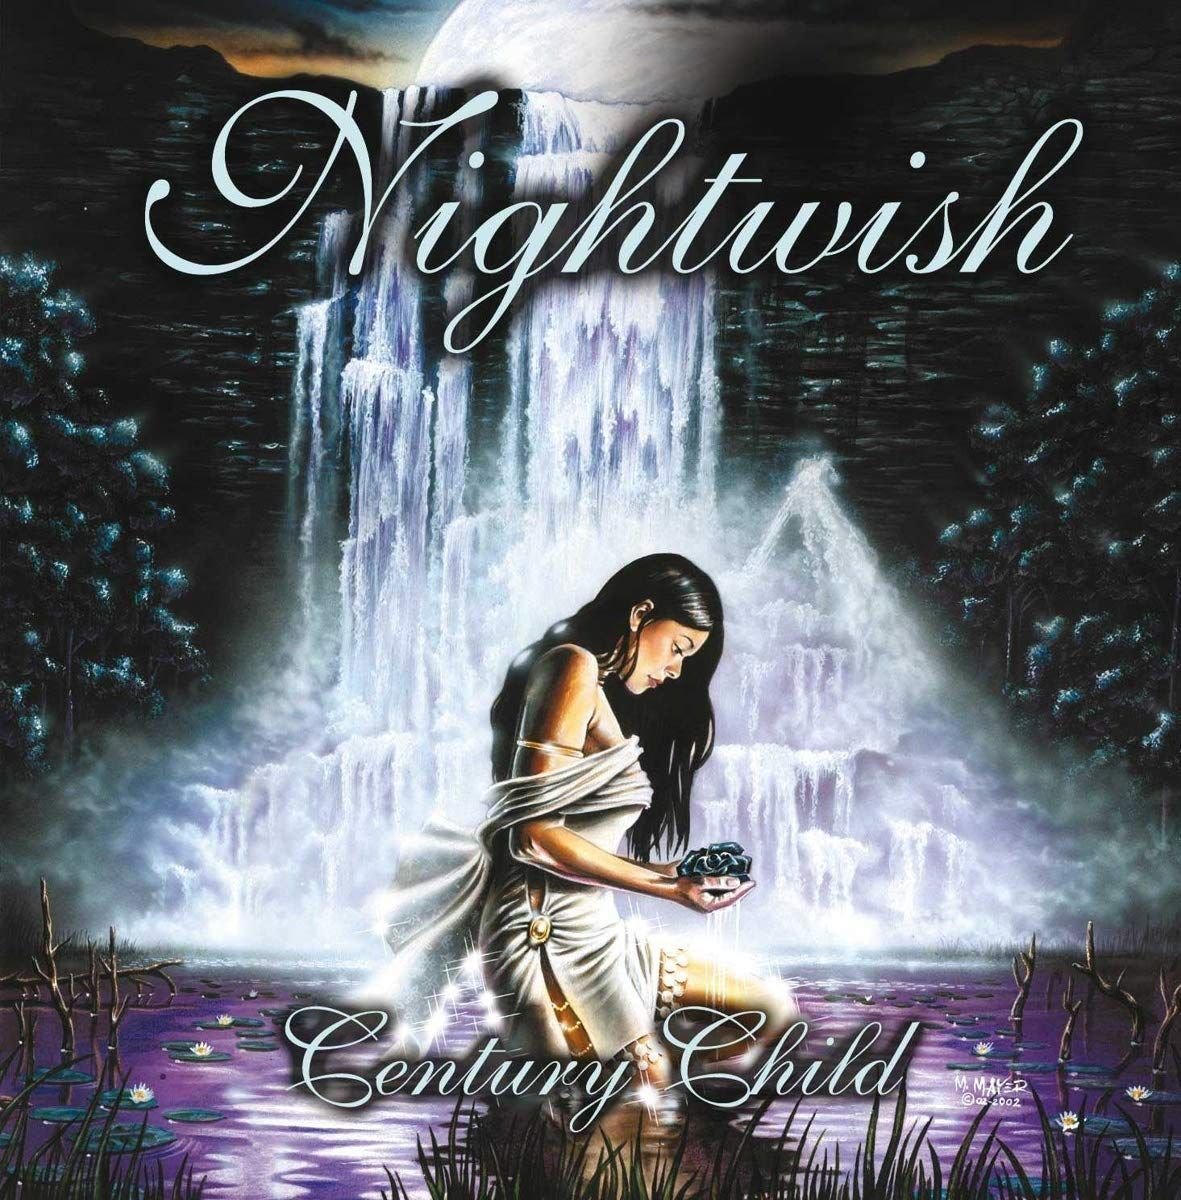 Vinyl Record Nightwish - Century Child (2 LP)